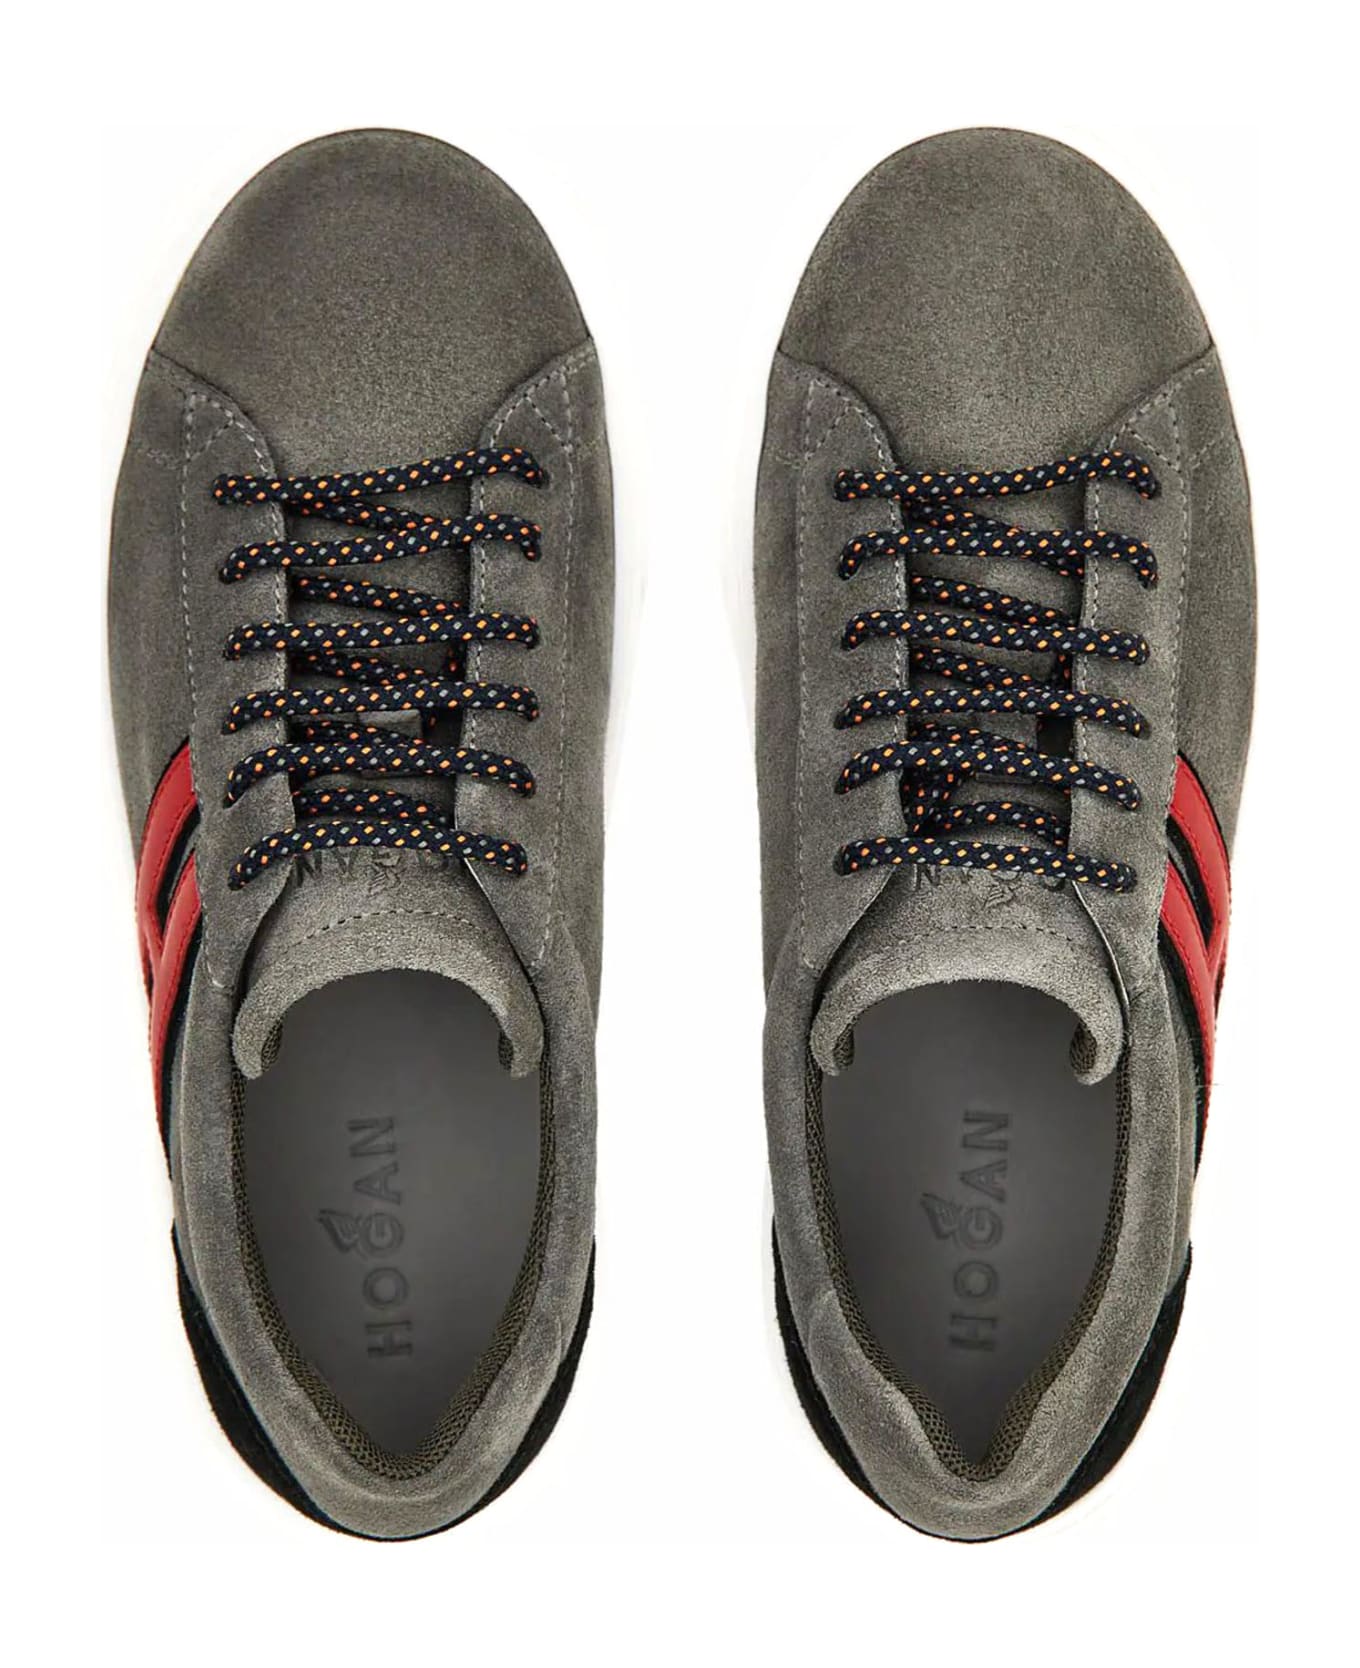 Hogan Sneakers Grey - Grey